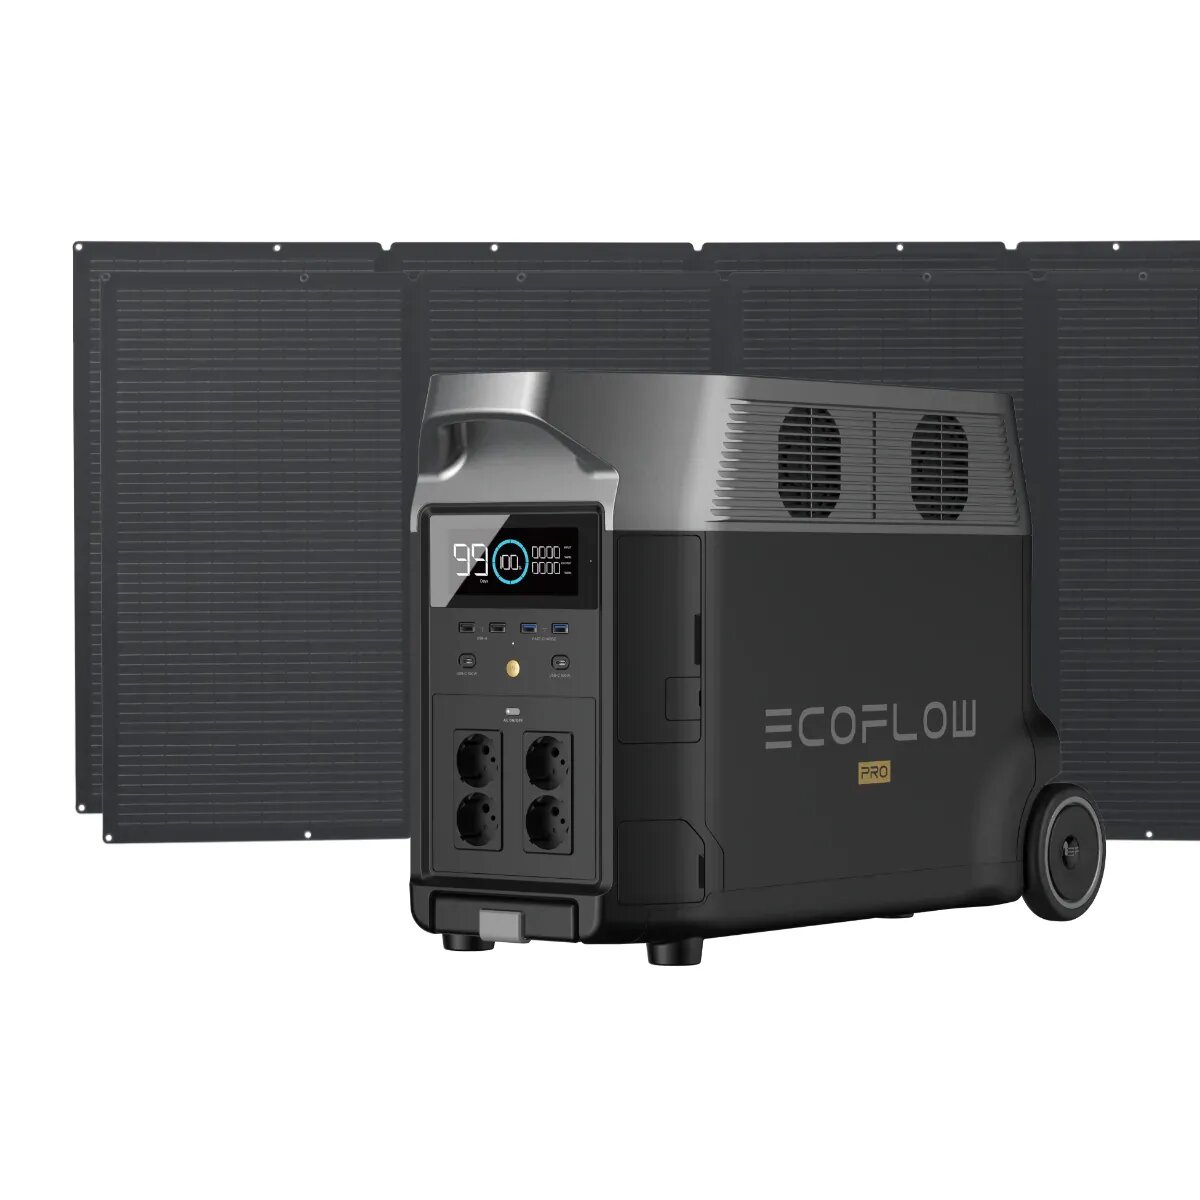  EcoFlow DELTA Pro + 2*400W Solar Panel 